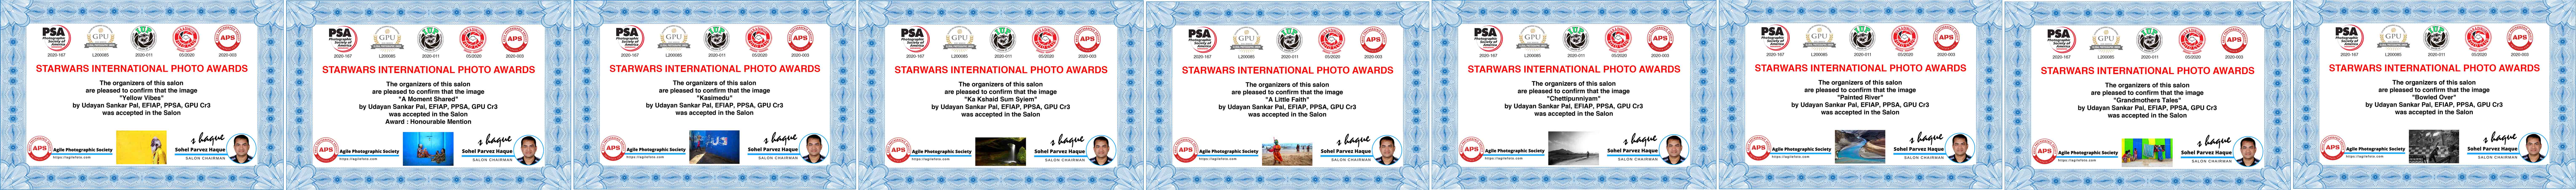 Starwars International Photo Awards-2020